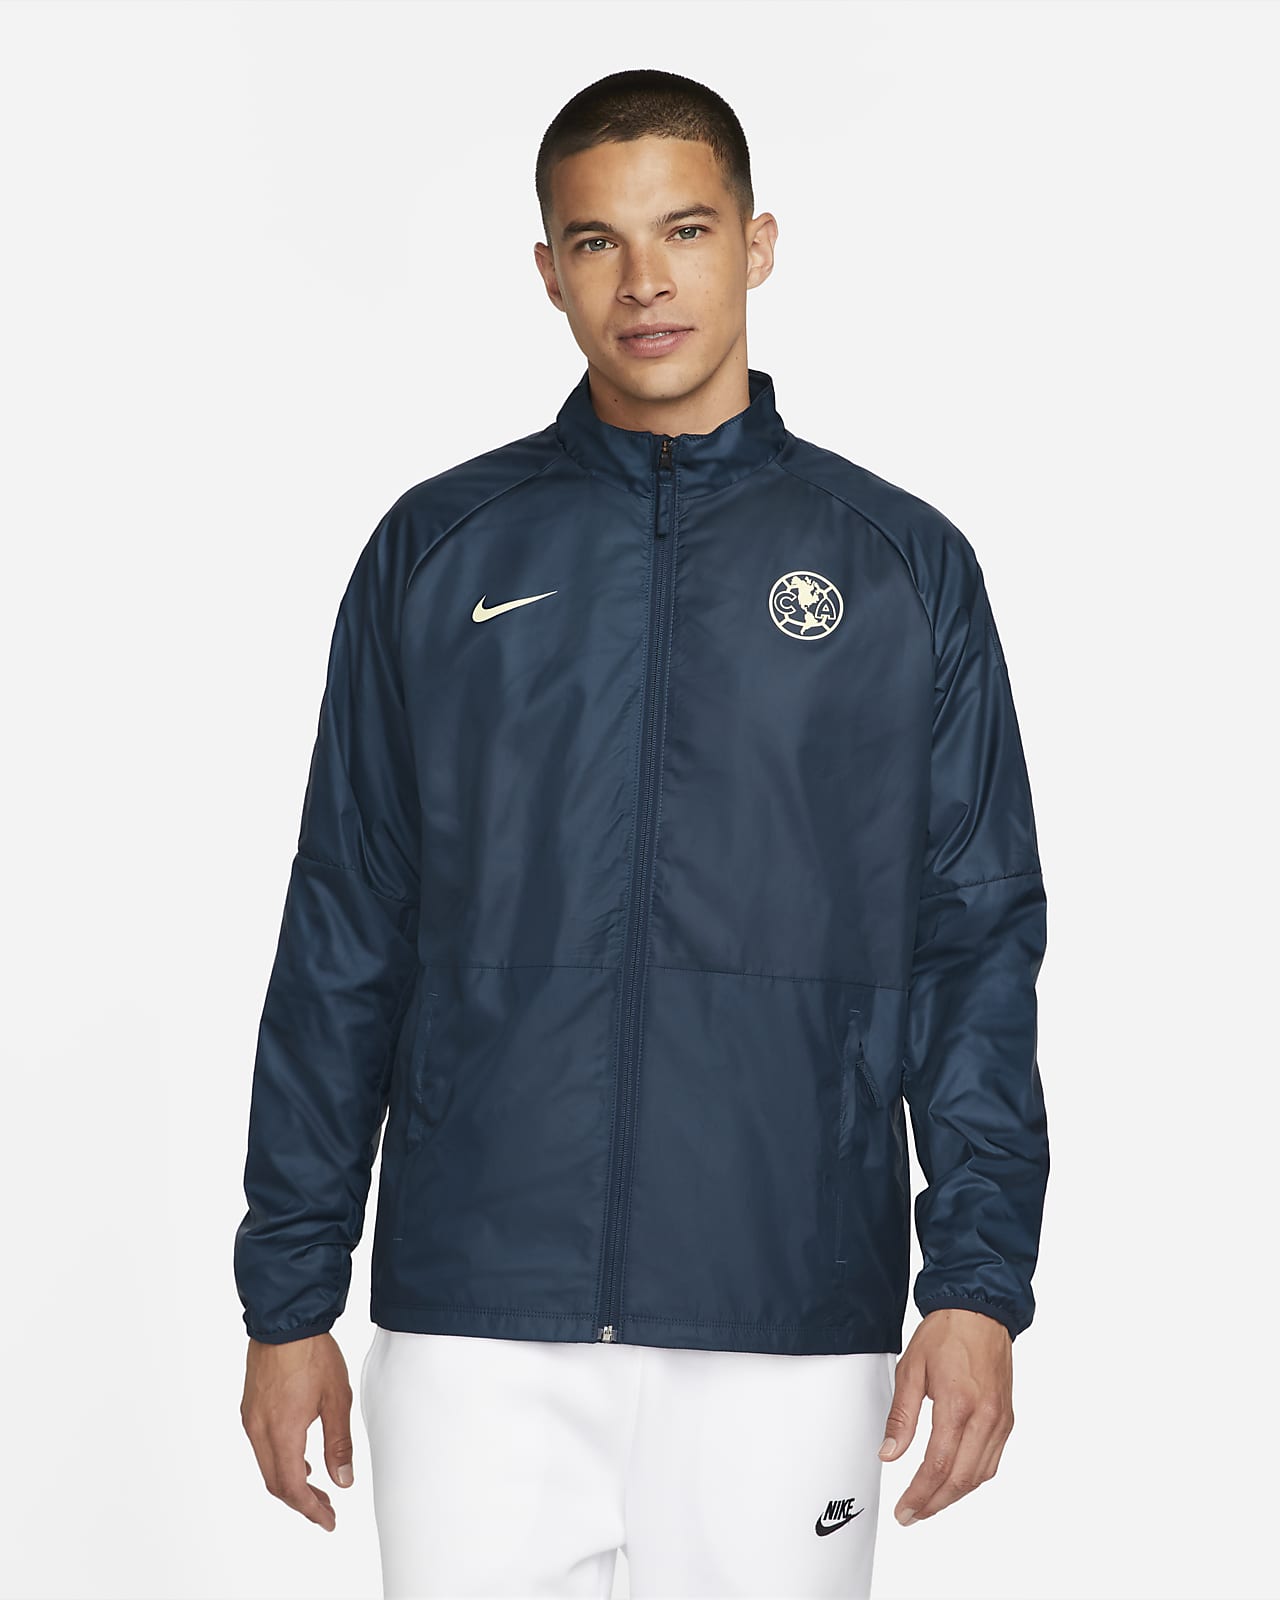 tobben Premisse Voorman Club América Repel Academy AWF Men's Soccer Jacket. Nike.com